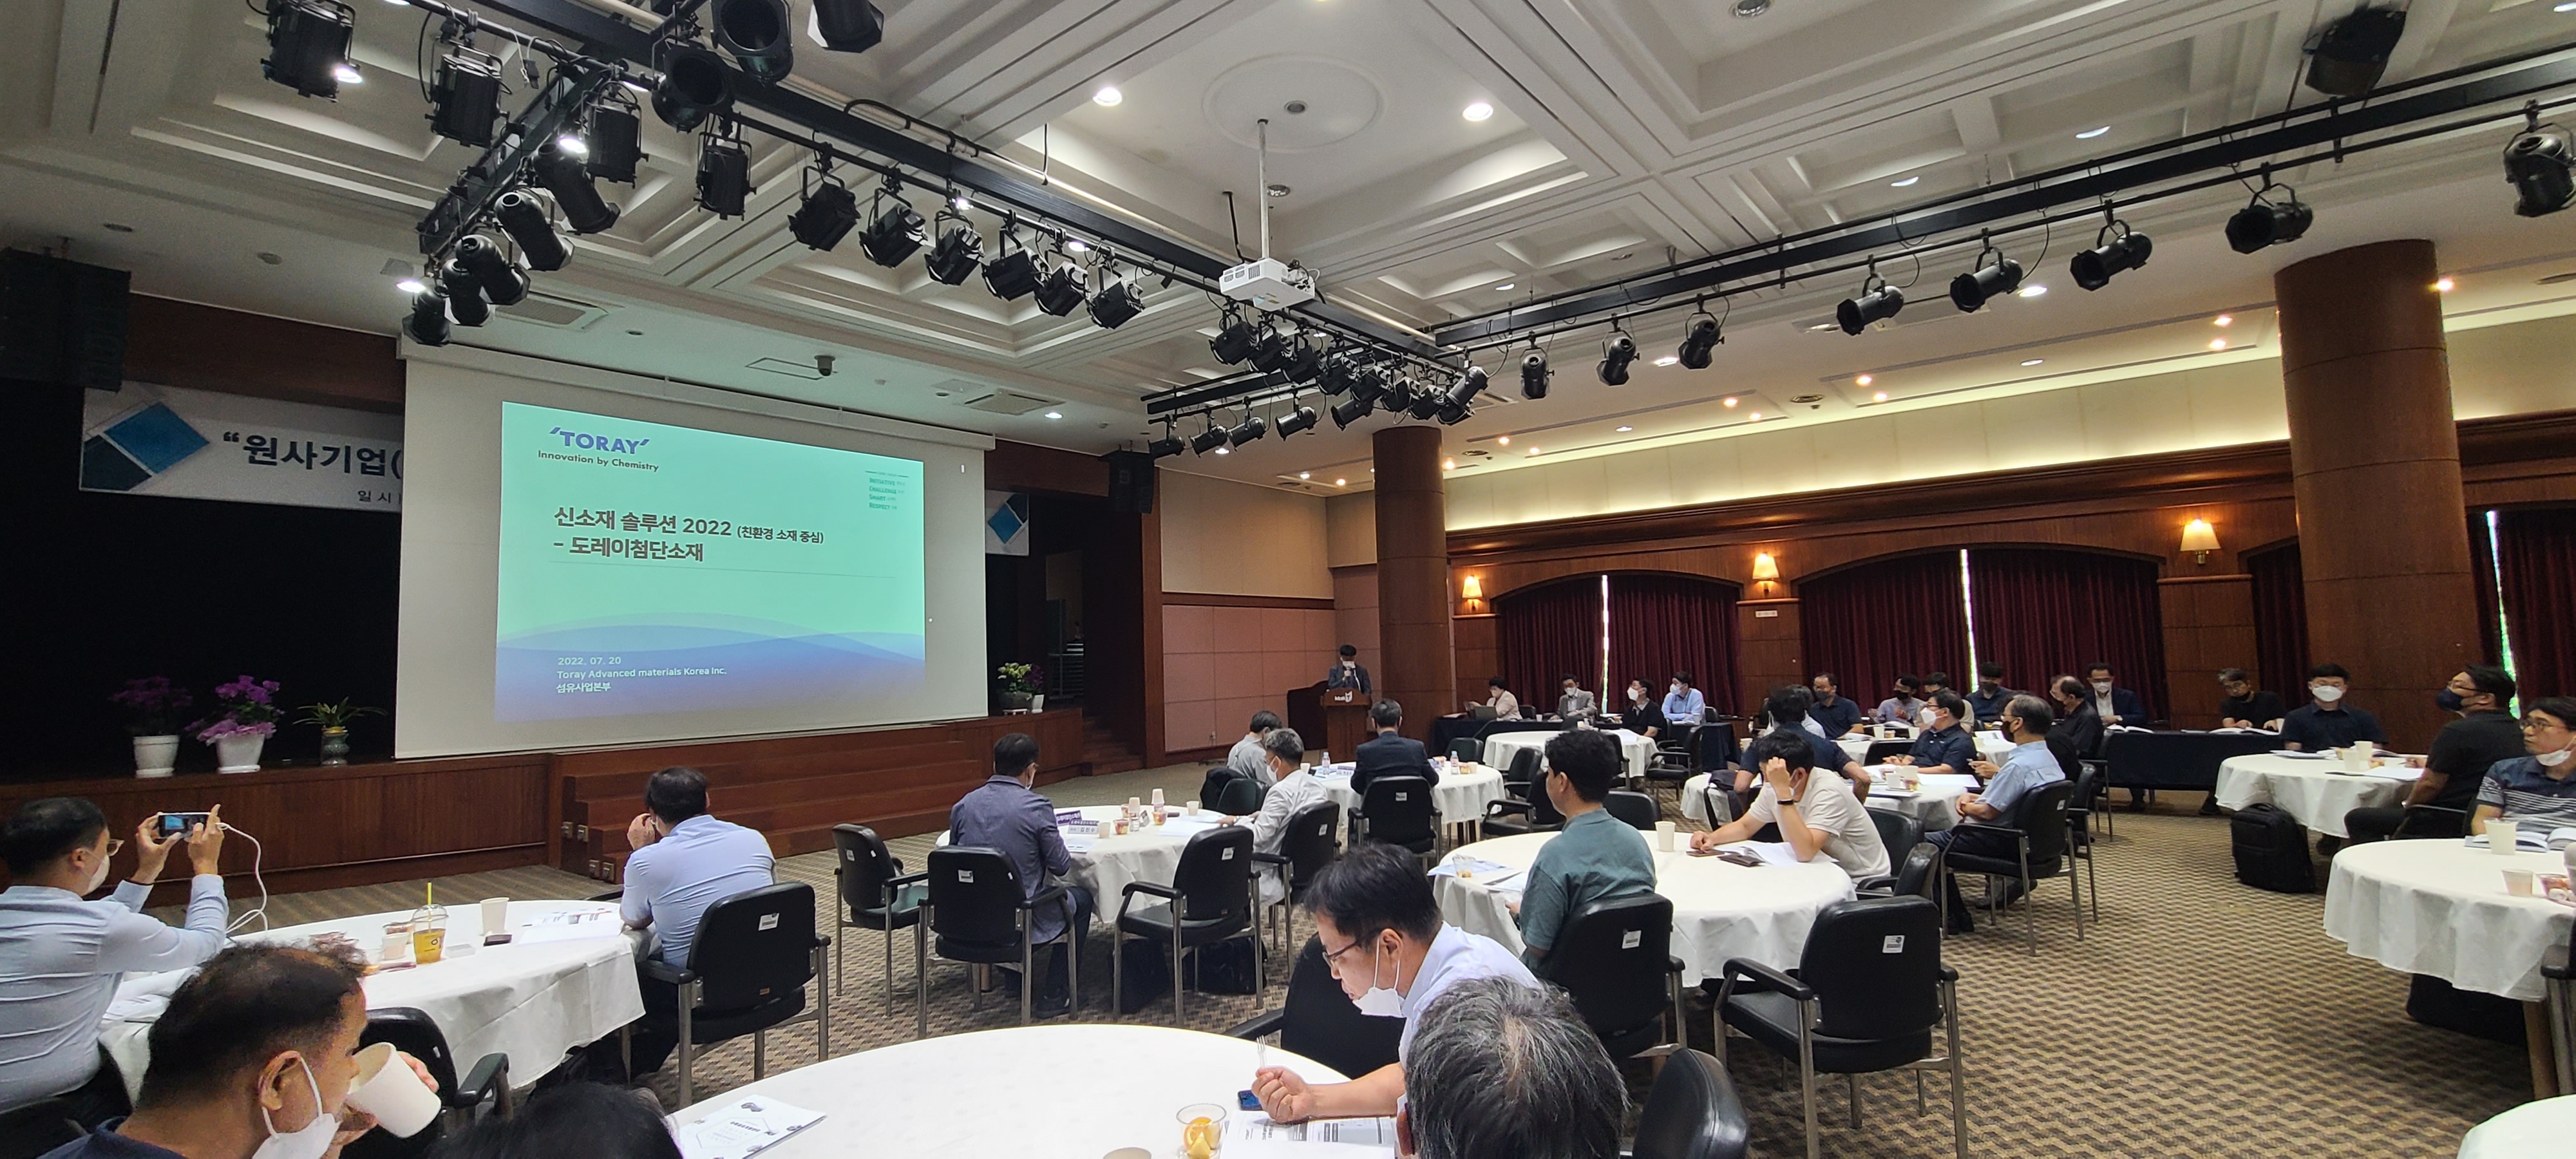 Fiber Marketing Team announces new material development trends at seminar of Korea Textile Development Institute